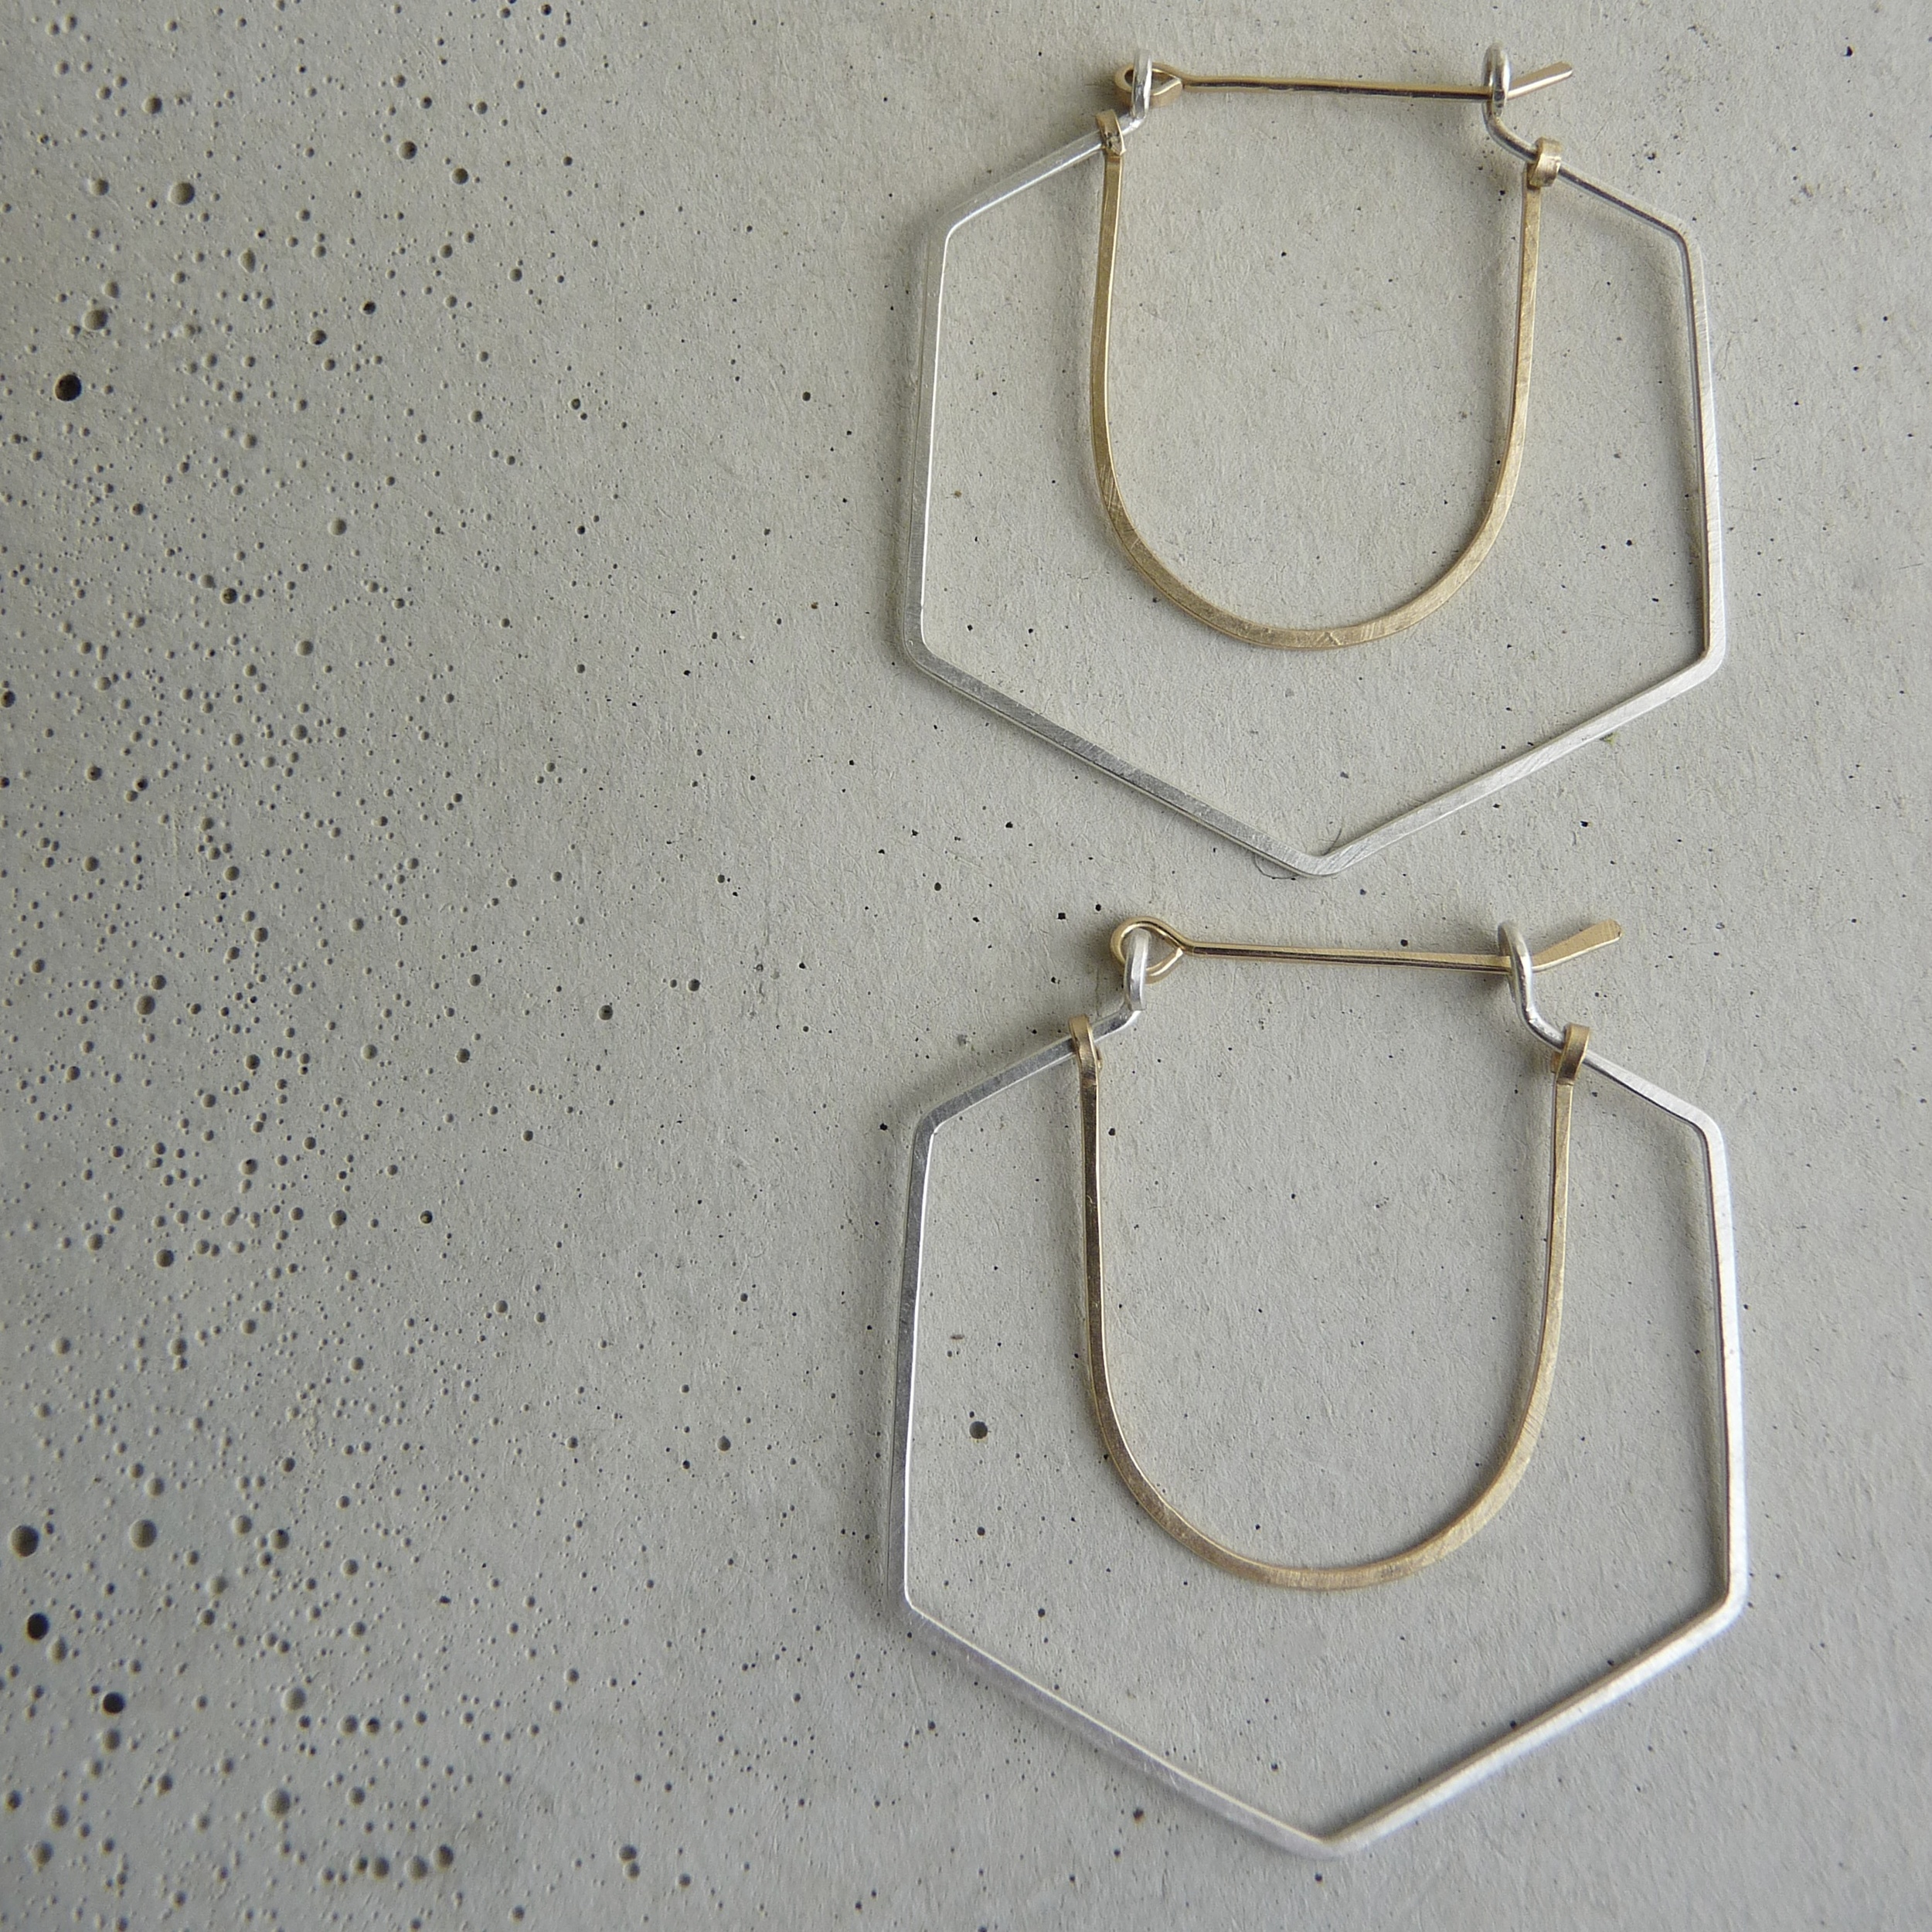 RAVINE hoop earrings, silver and gold geometric hoops, hammered silver hoop earrings, new refined basics